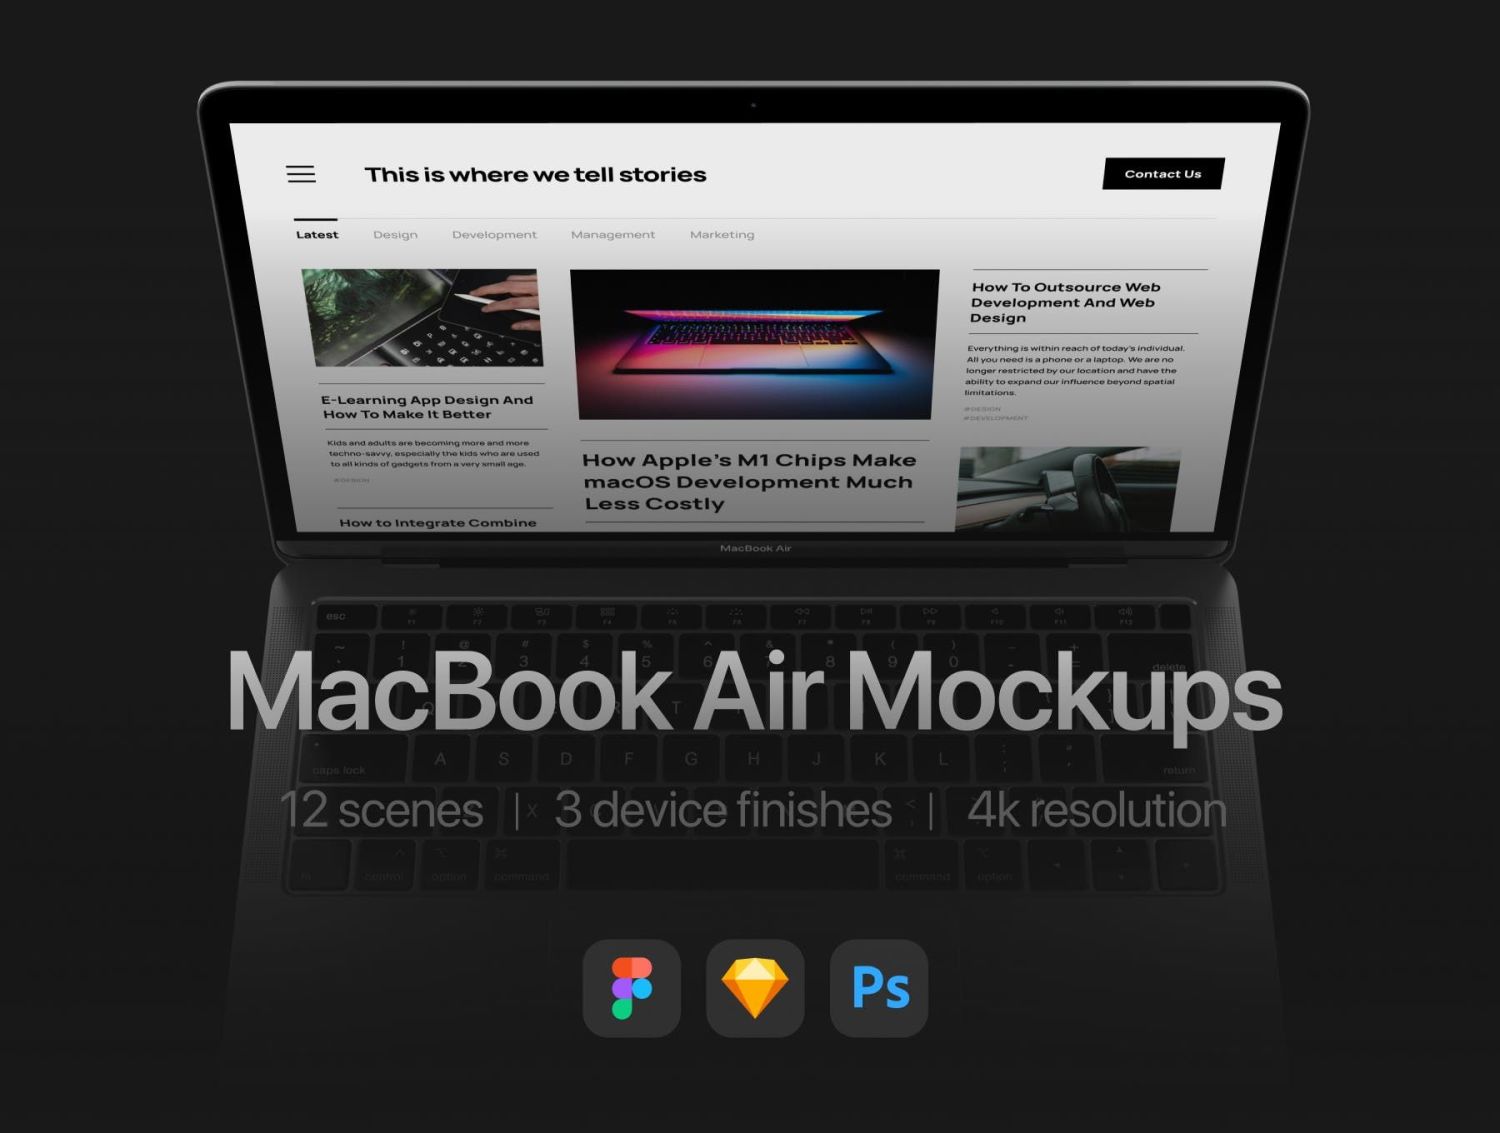 12个最受欢迎的MacBook Air 样机 12 Most Popular MacBook Air Mockups插图